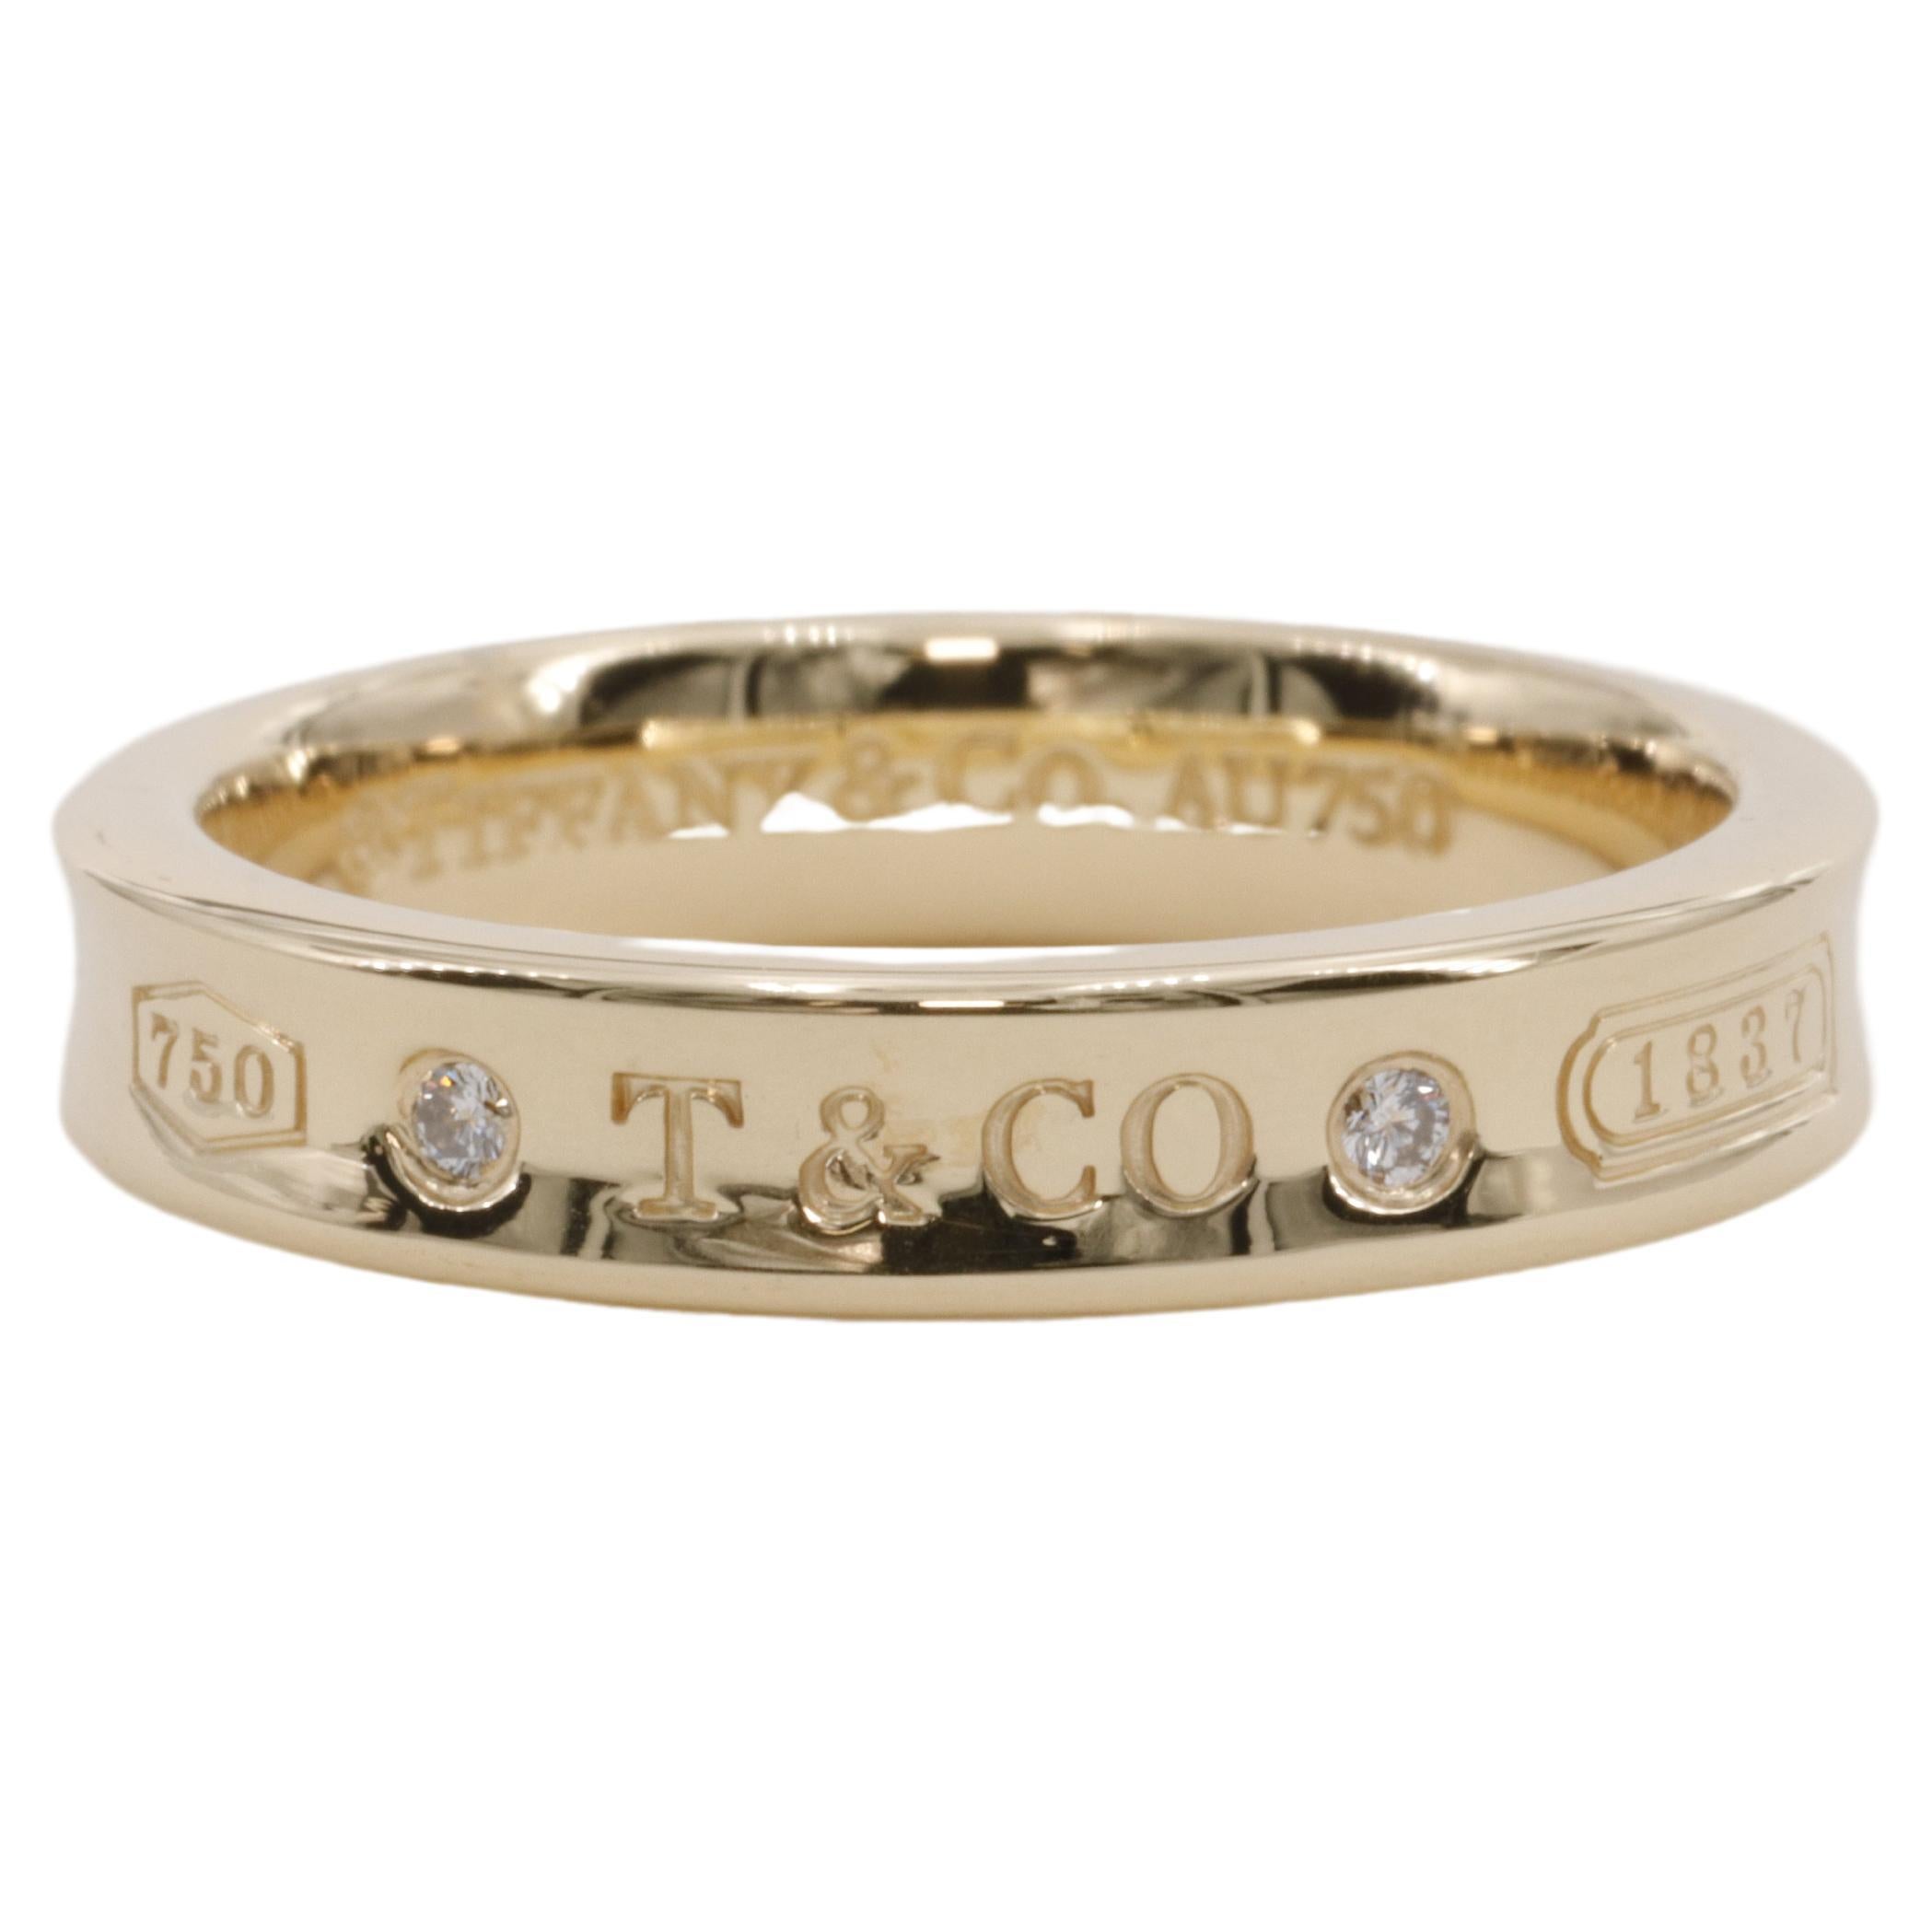 Tiffany & Co. 1837 Diamond Band Ring in 18 Karat Yellow Gold 